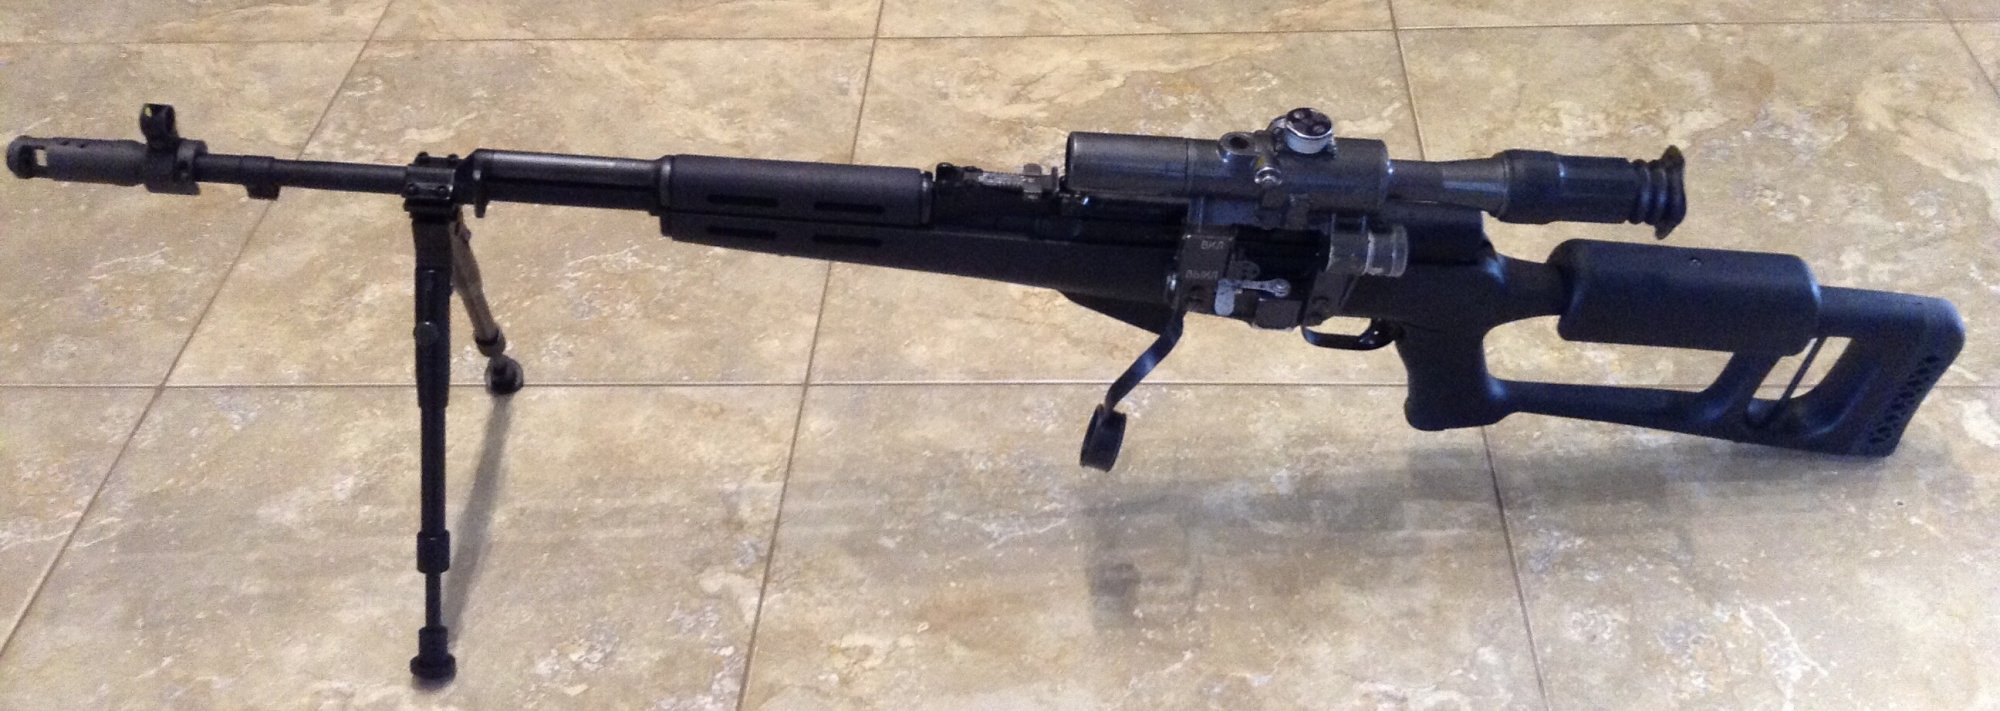 Сошки на свд. Ложе - Choate Dragunov Rifle stock SKS Synthetic Black. Сошки для СВД m001. СКС И СВД. СКС ложе СВД.